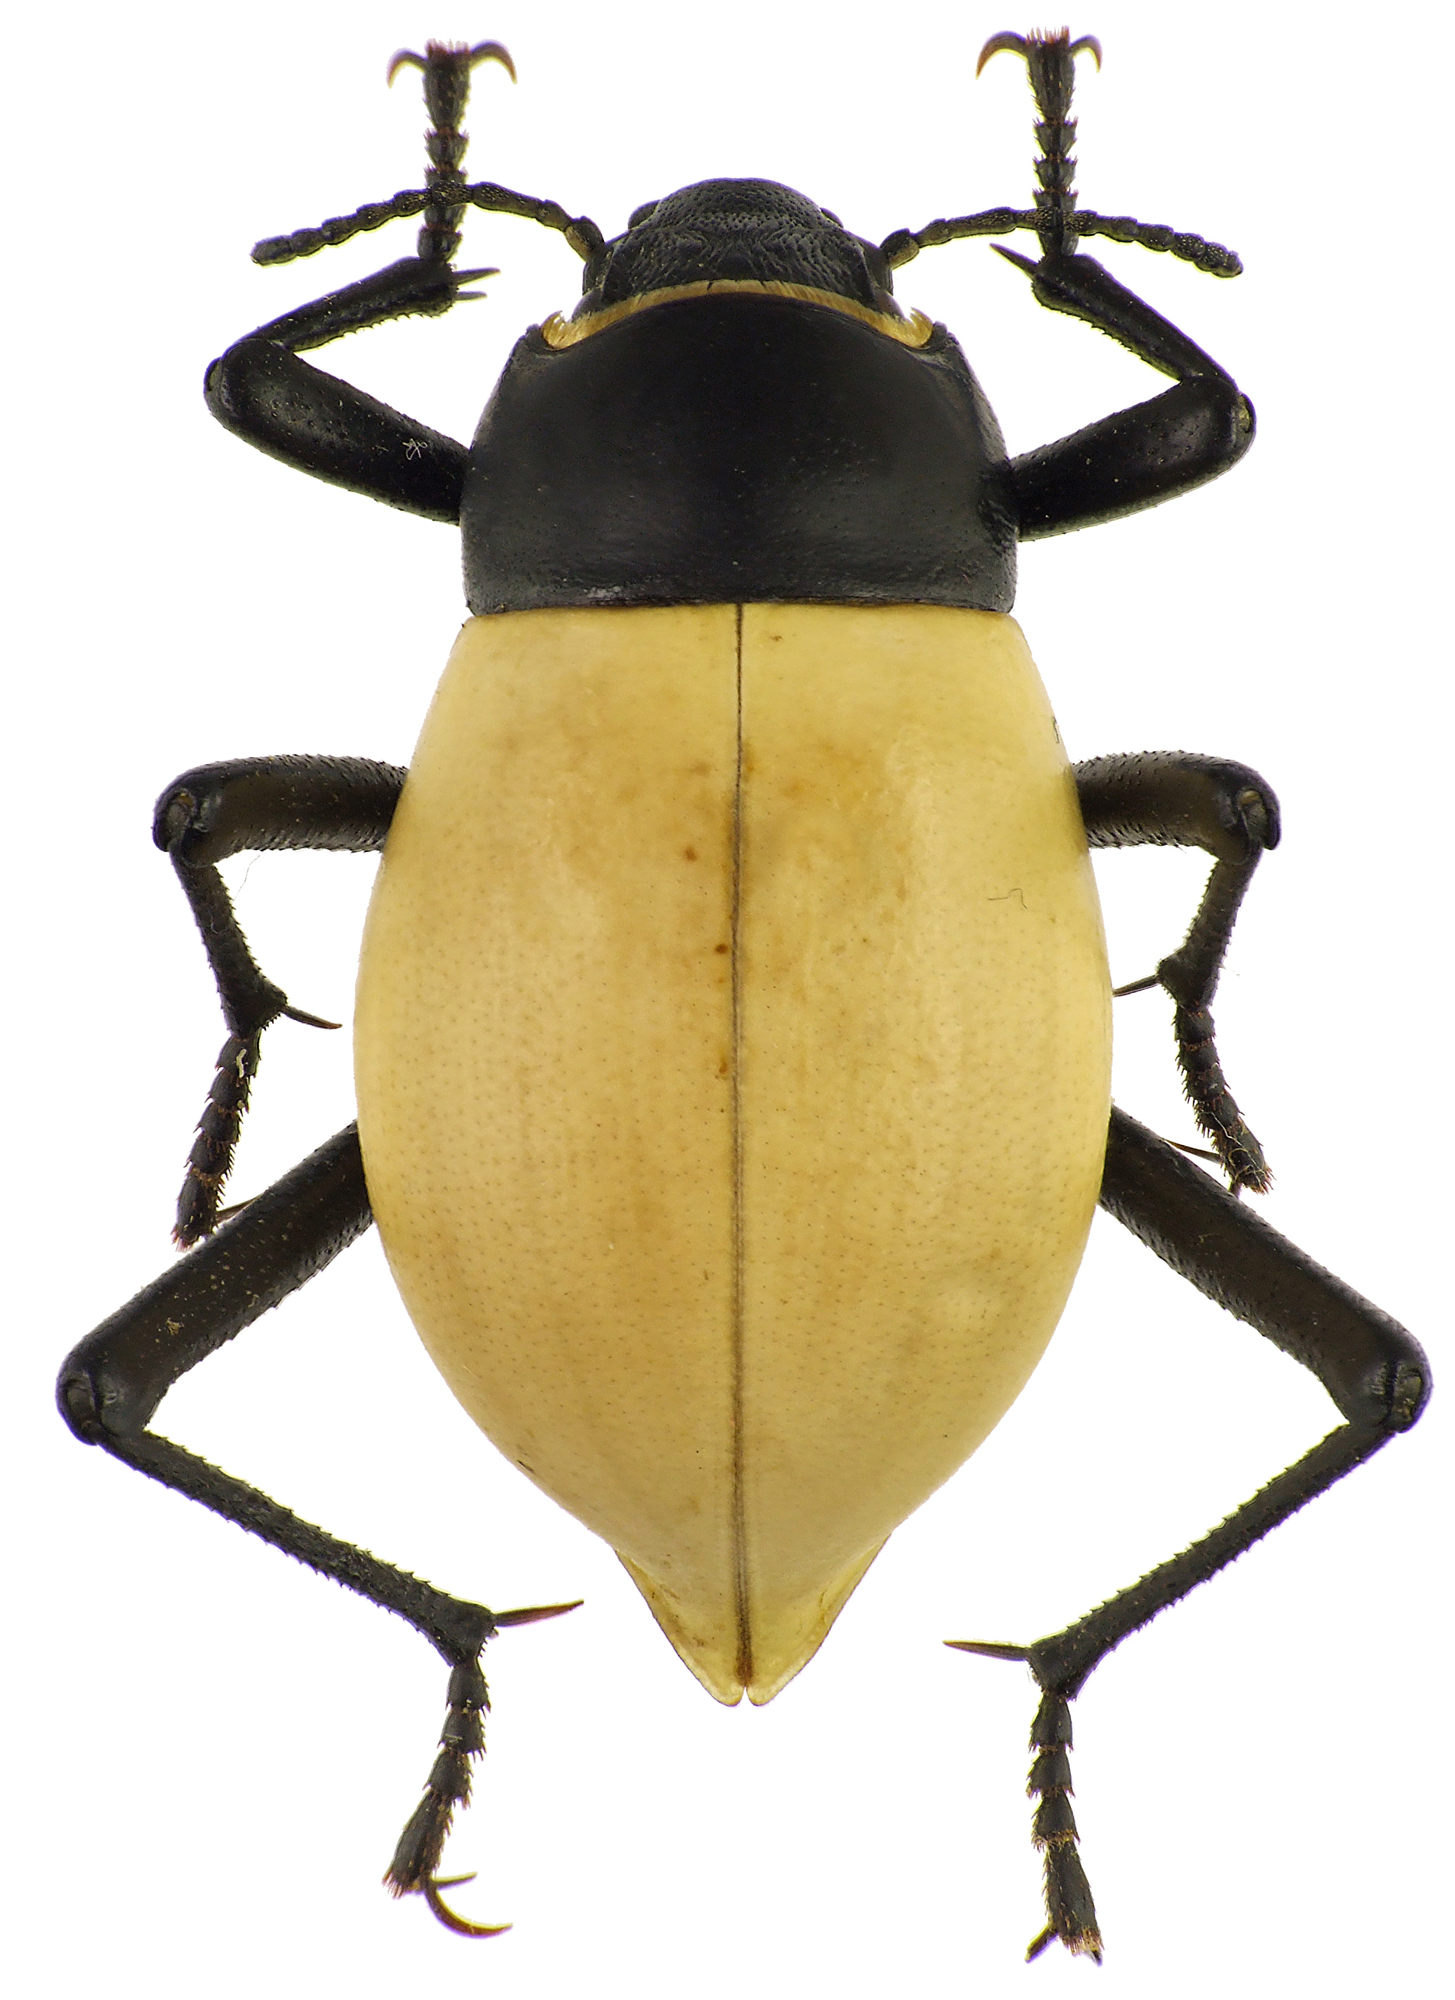 Onymacris candidipennis 83164cz76.jpg